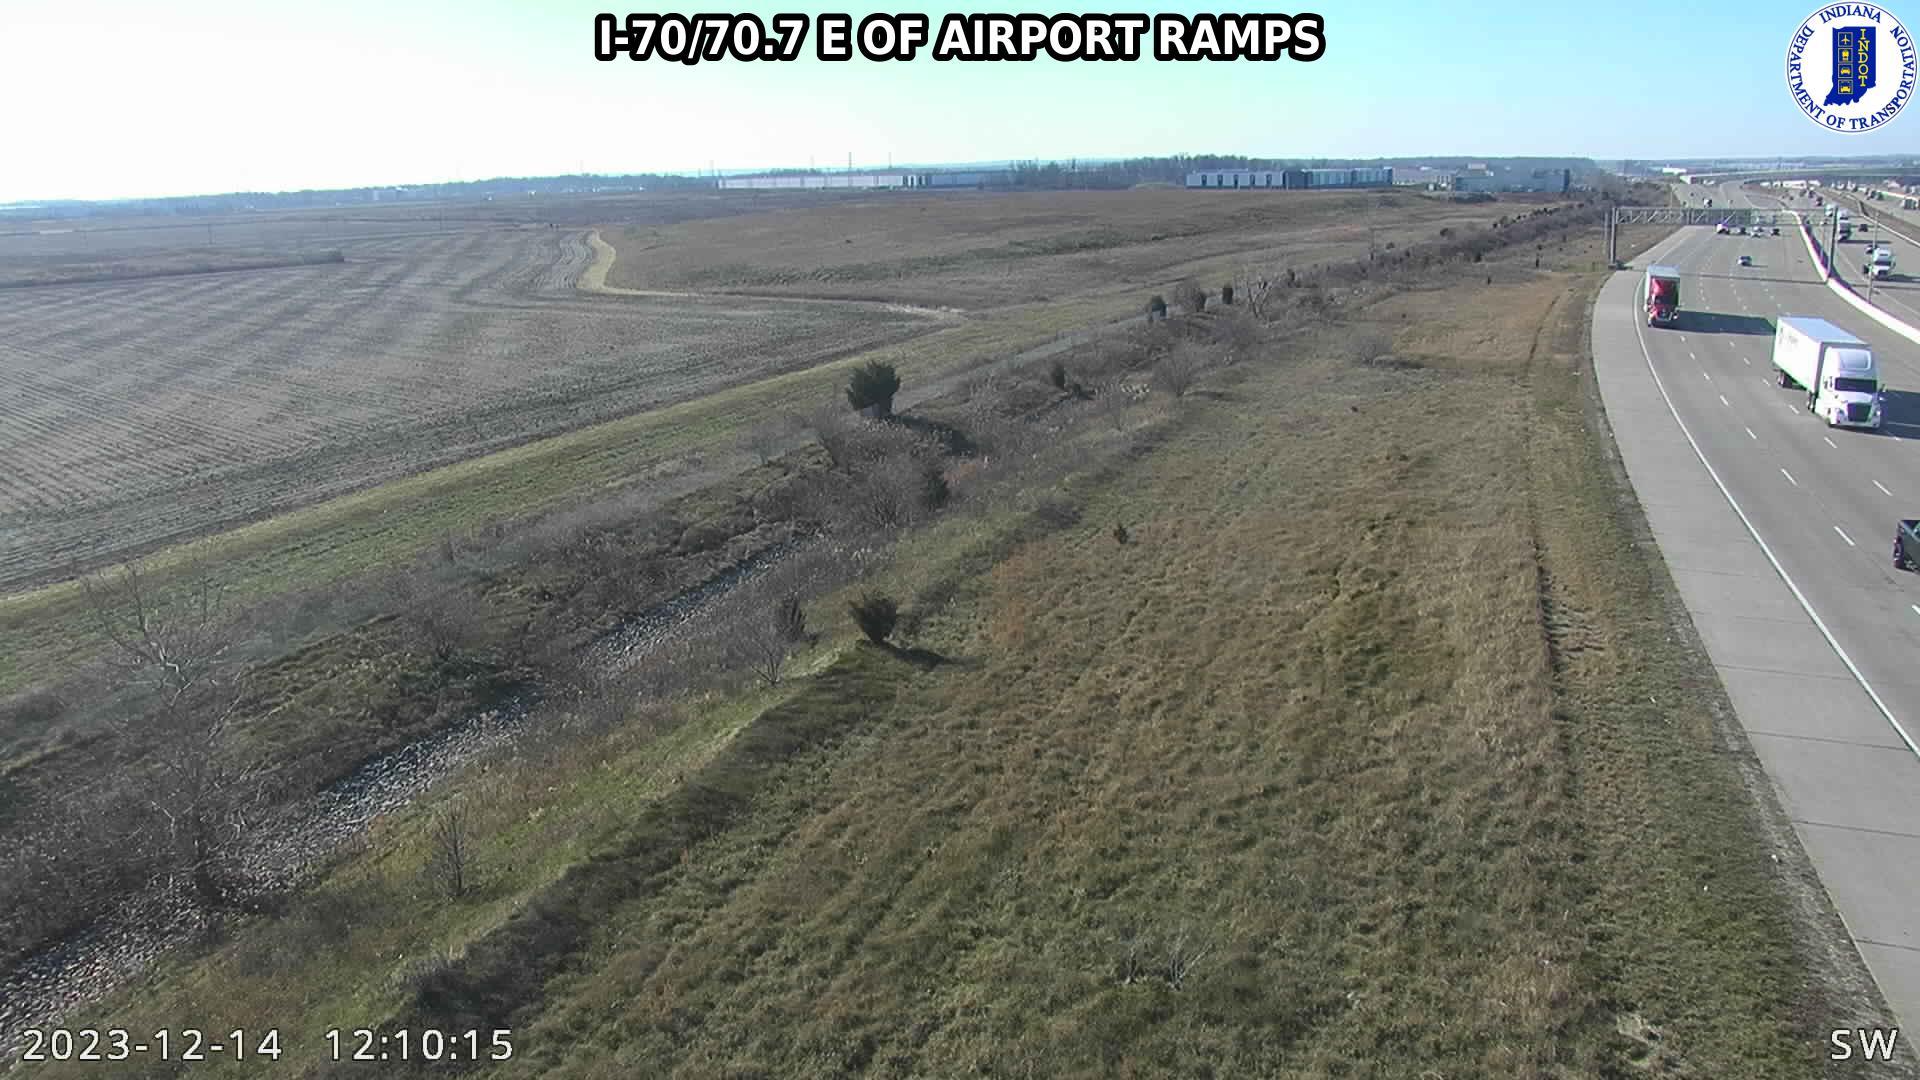 Indianapolis: I-70: I-70/70.7 E OF AIRPORT RAMPS Traffic Camera